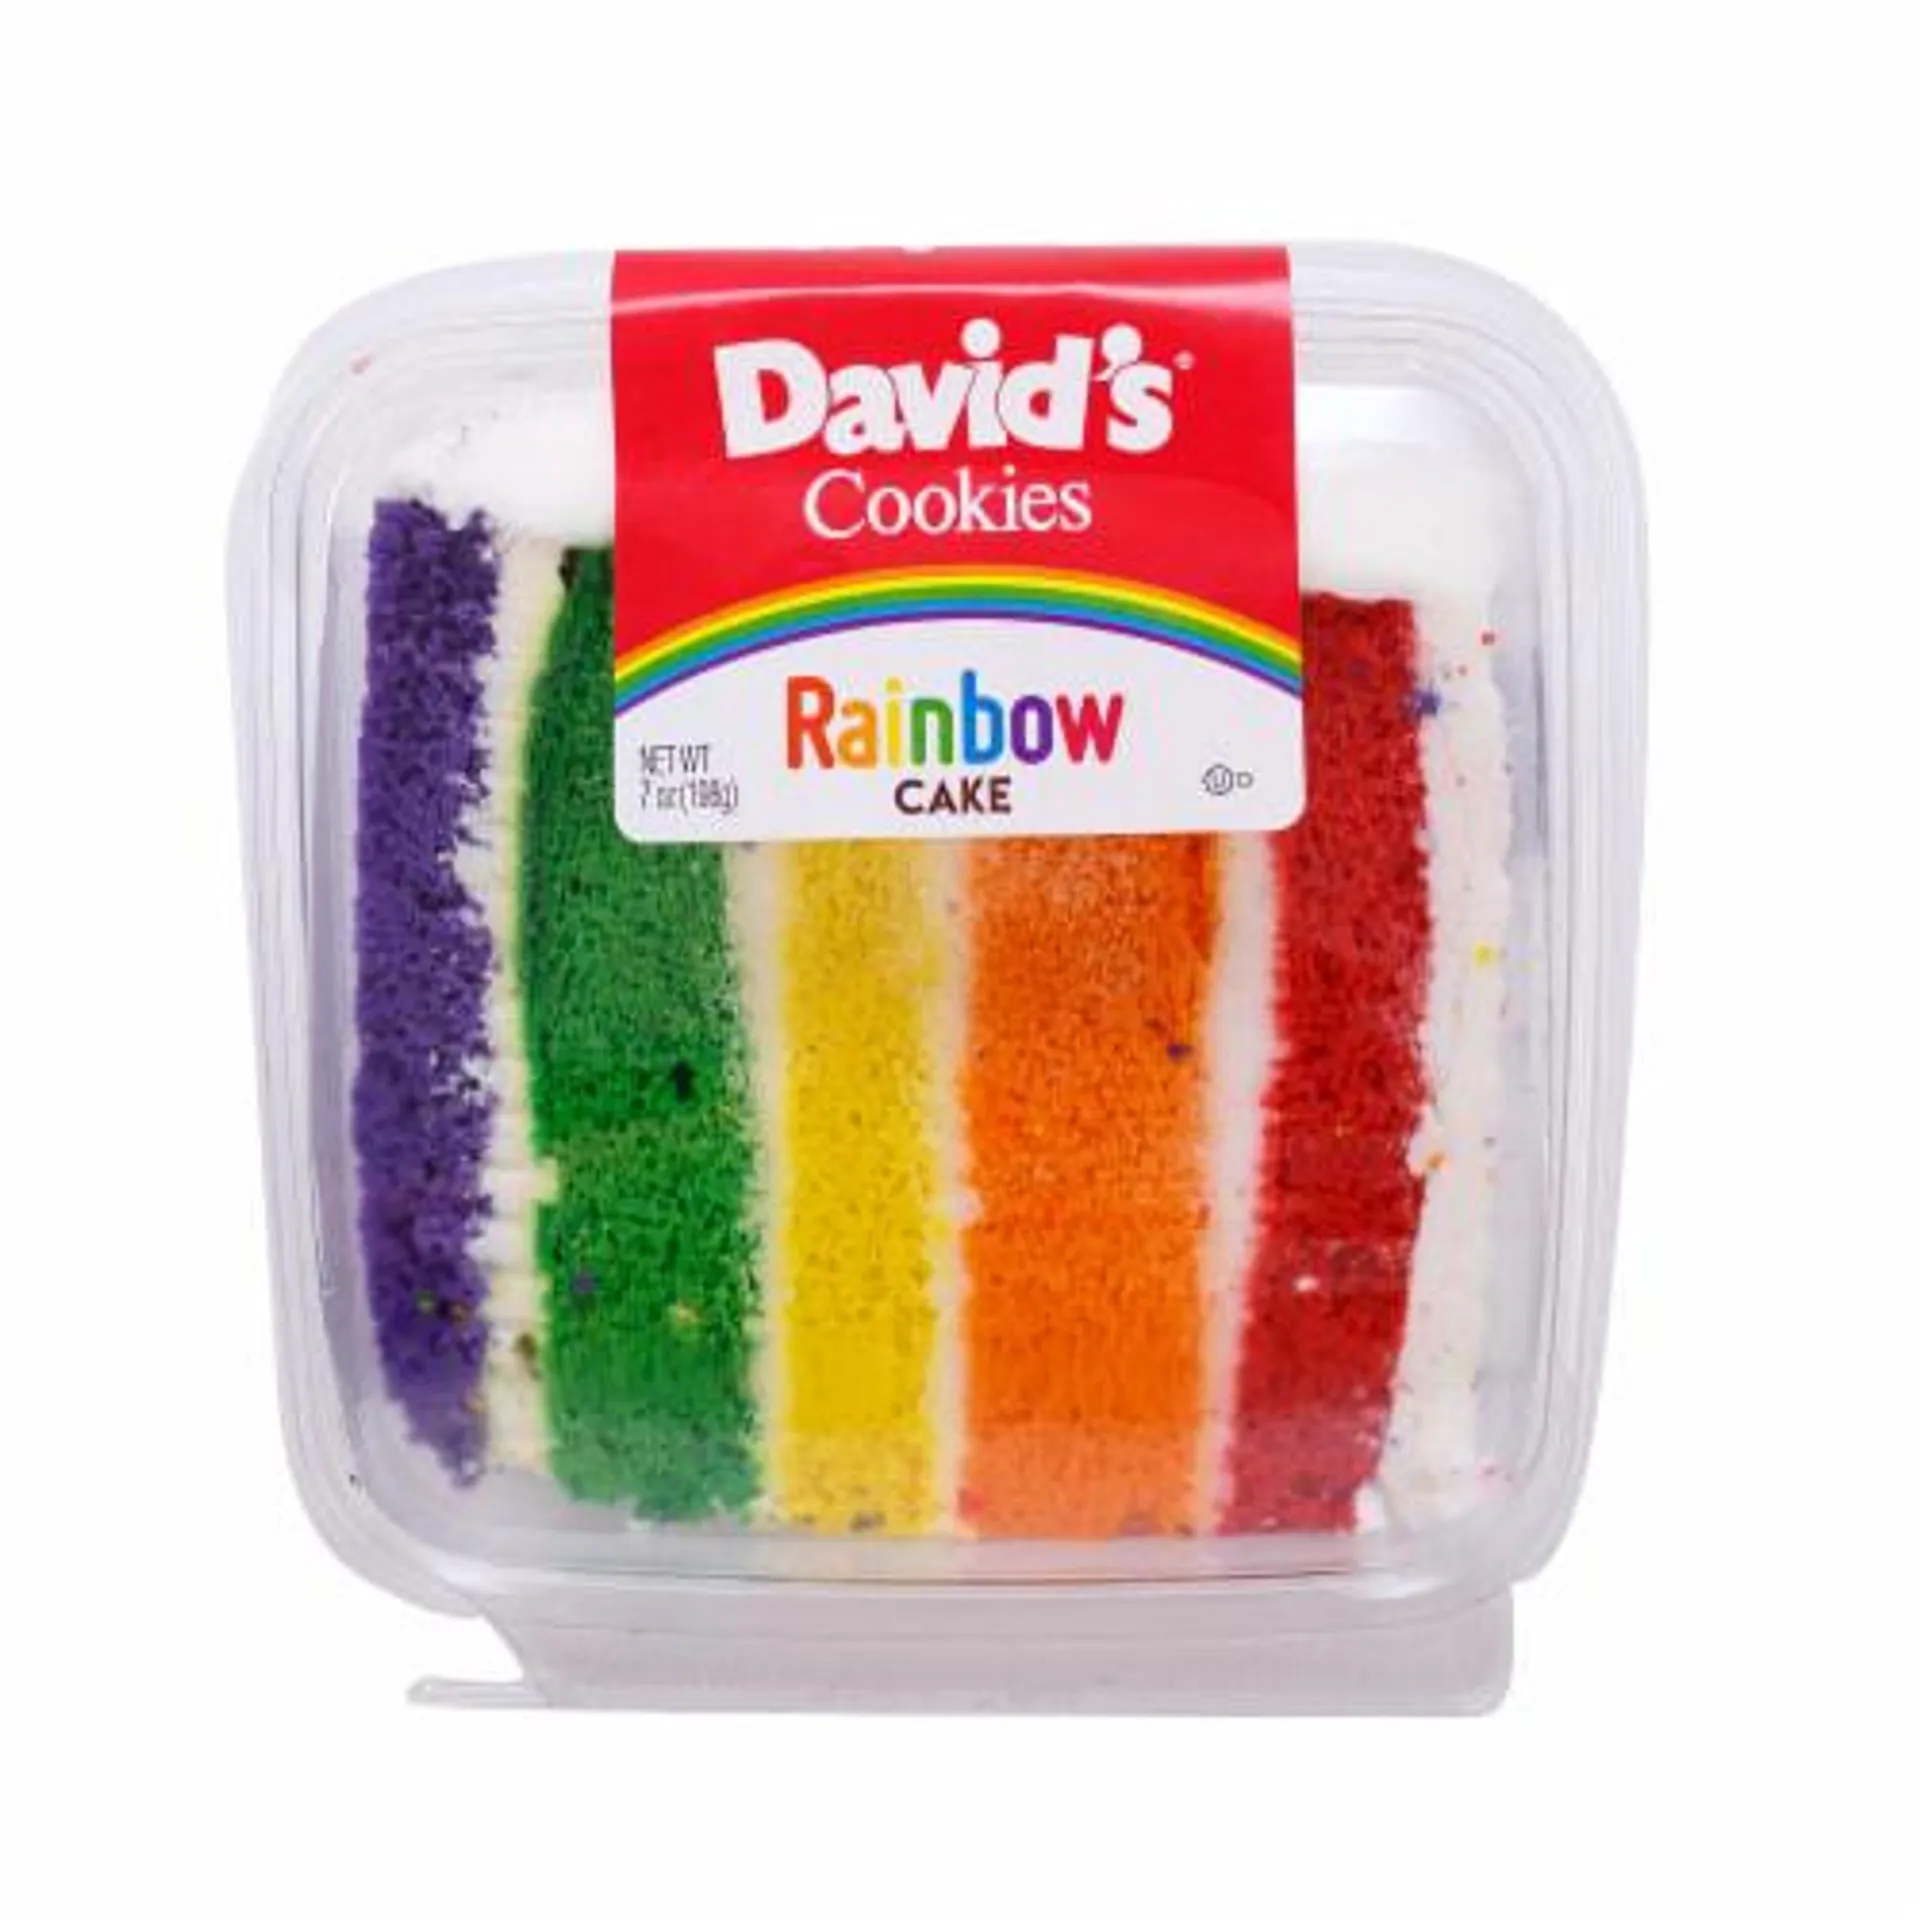 David's Cookies Rainbow Cake Slice